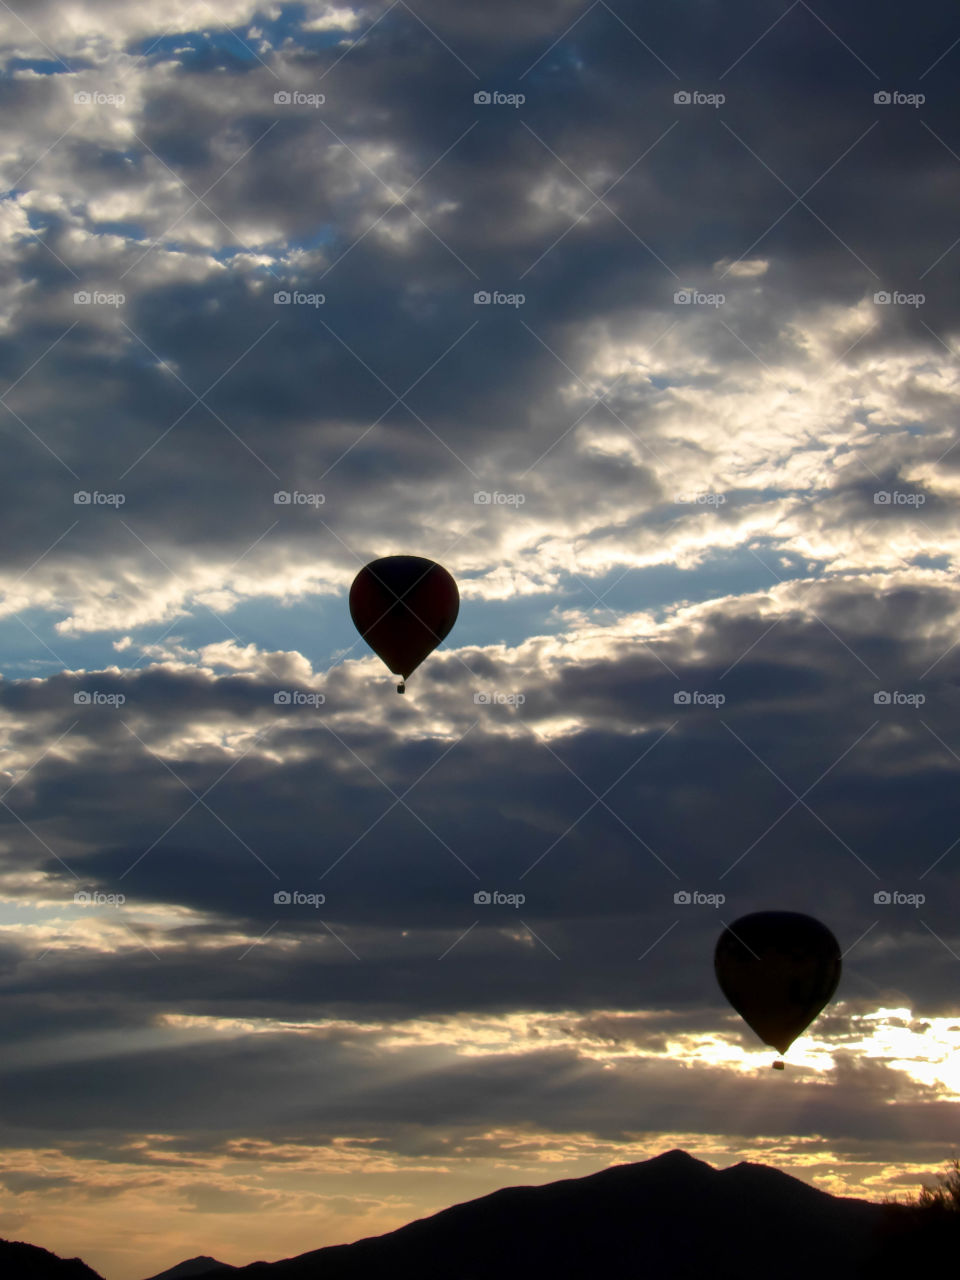 Sunrise balloons up!
